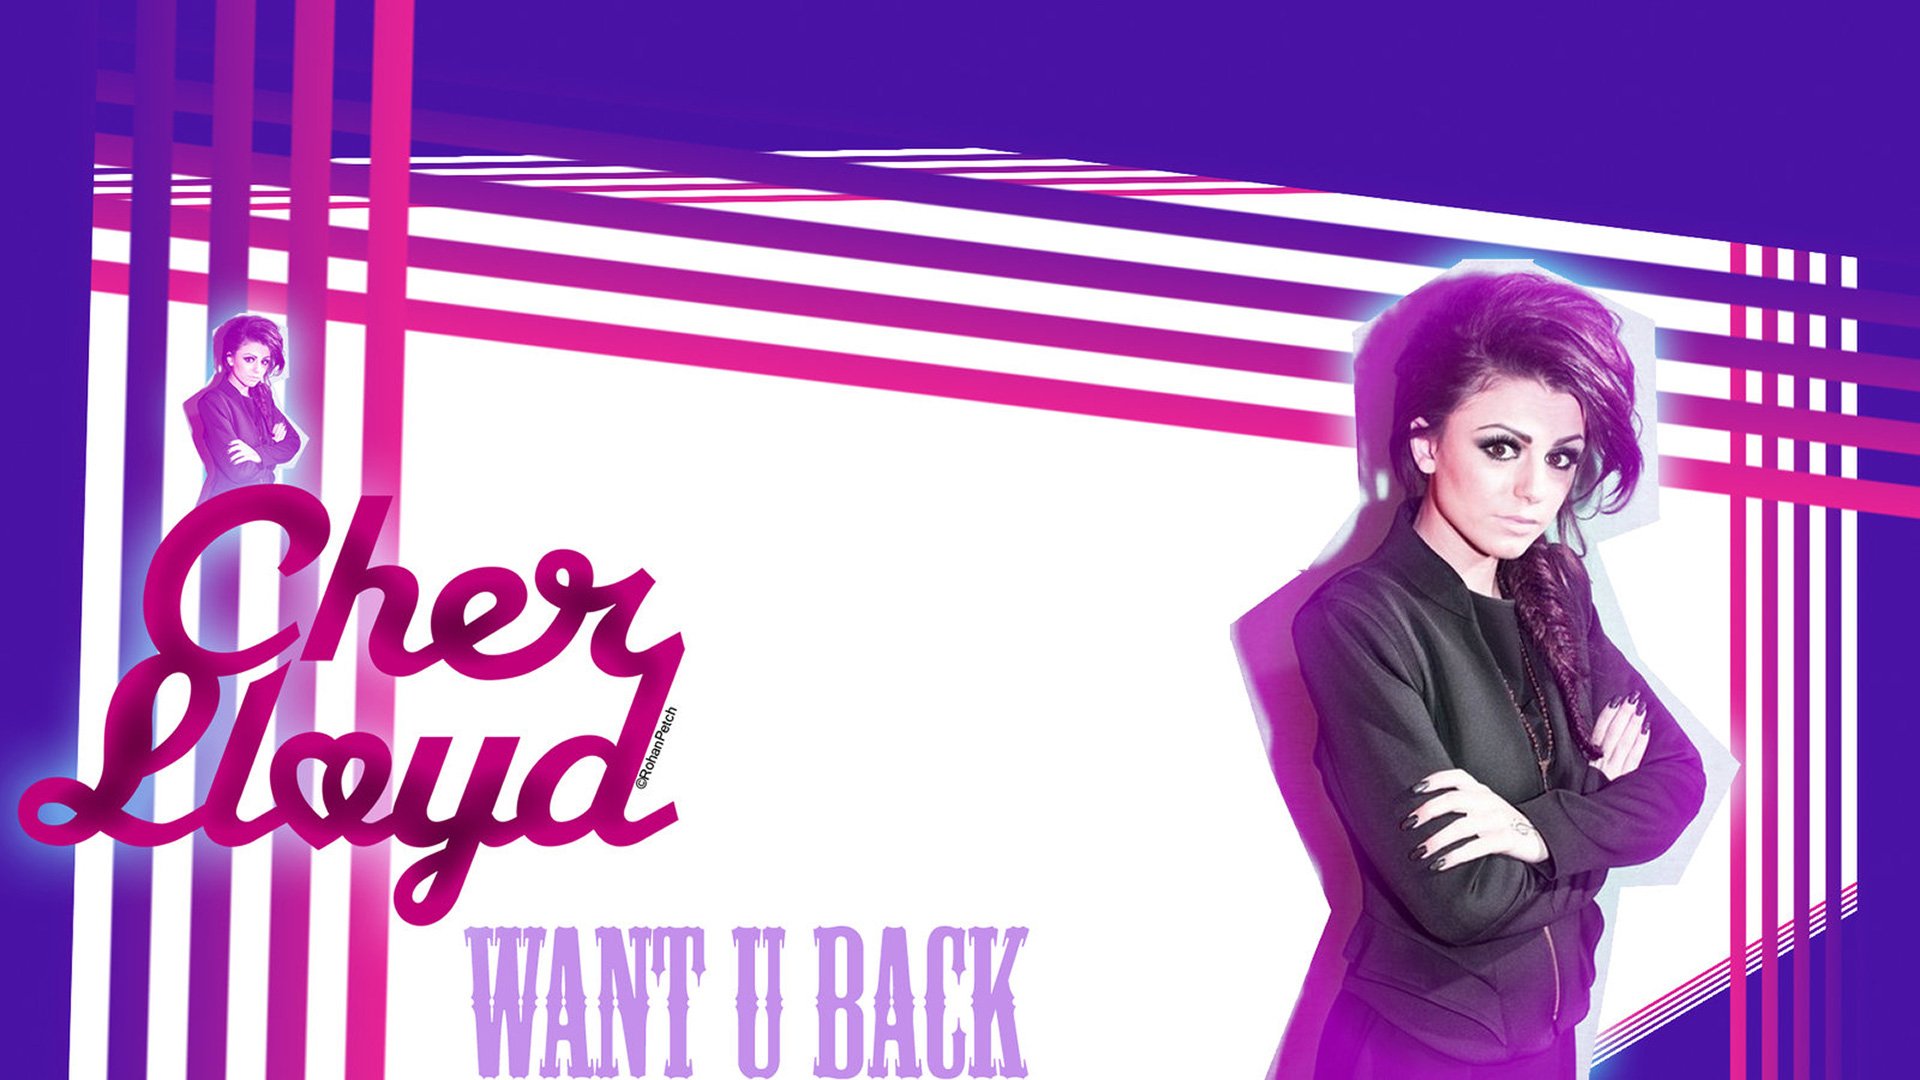 Cher Lloyd Icons - wide 2